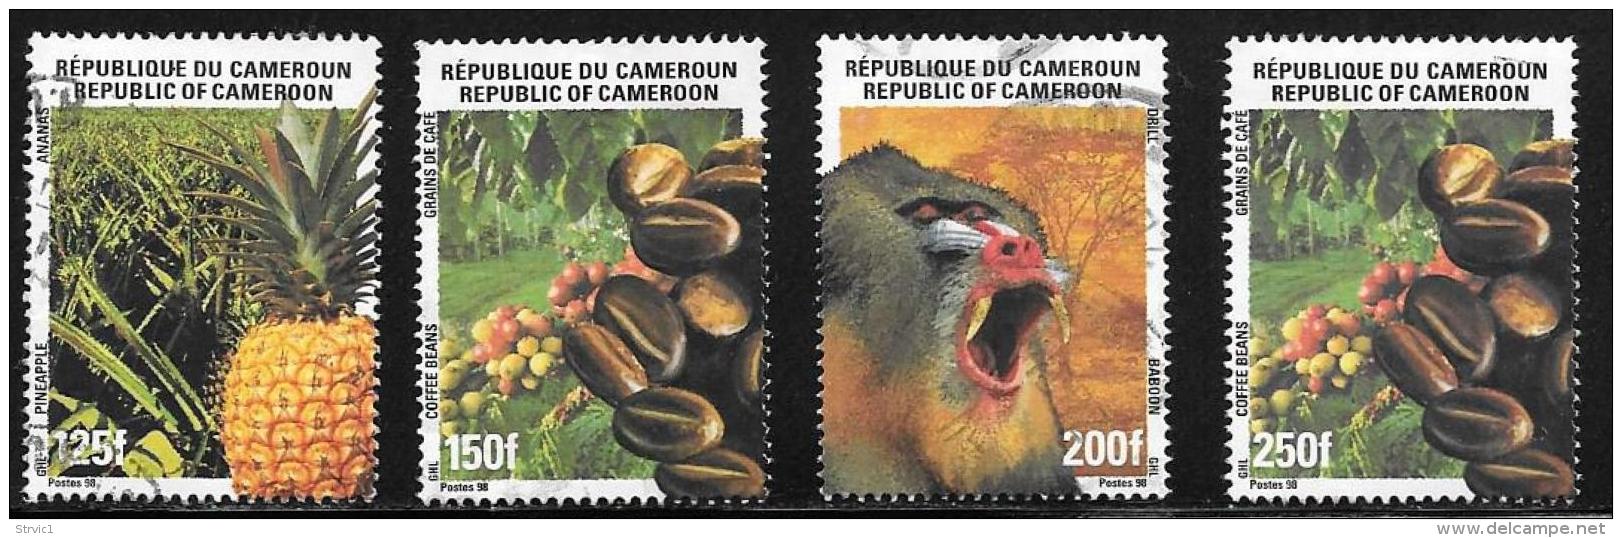 Cameroun, Scott # 930, 930A,931-2 Used Flora And Fauna, 2000 - Cameroon (1960-...)